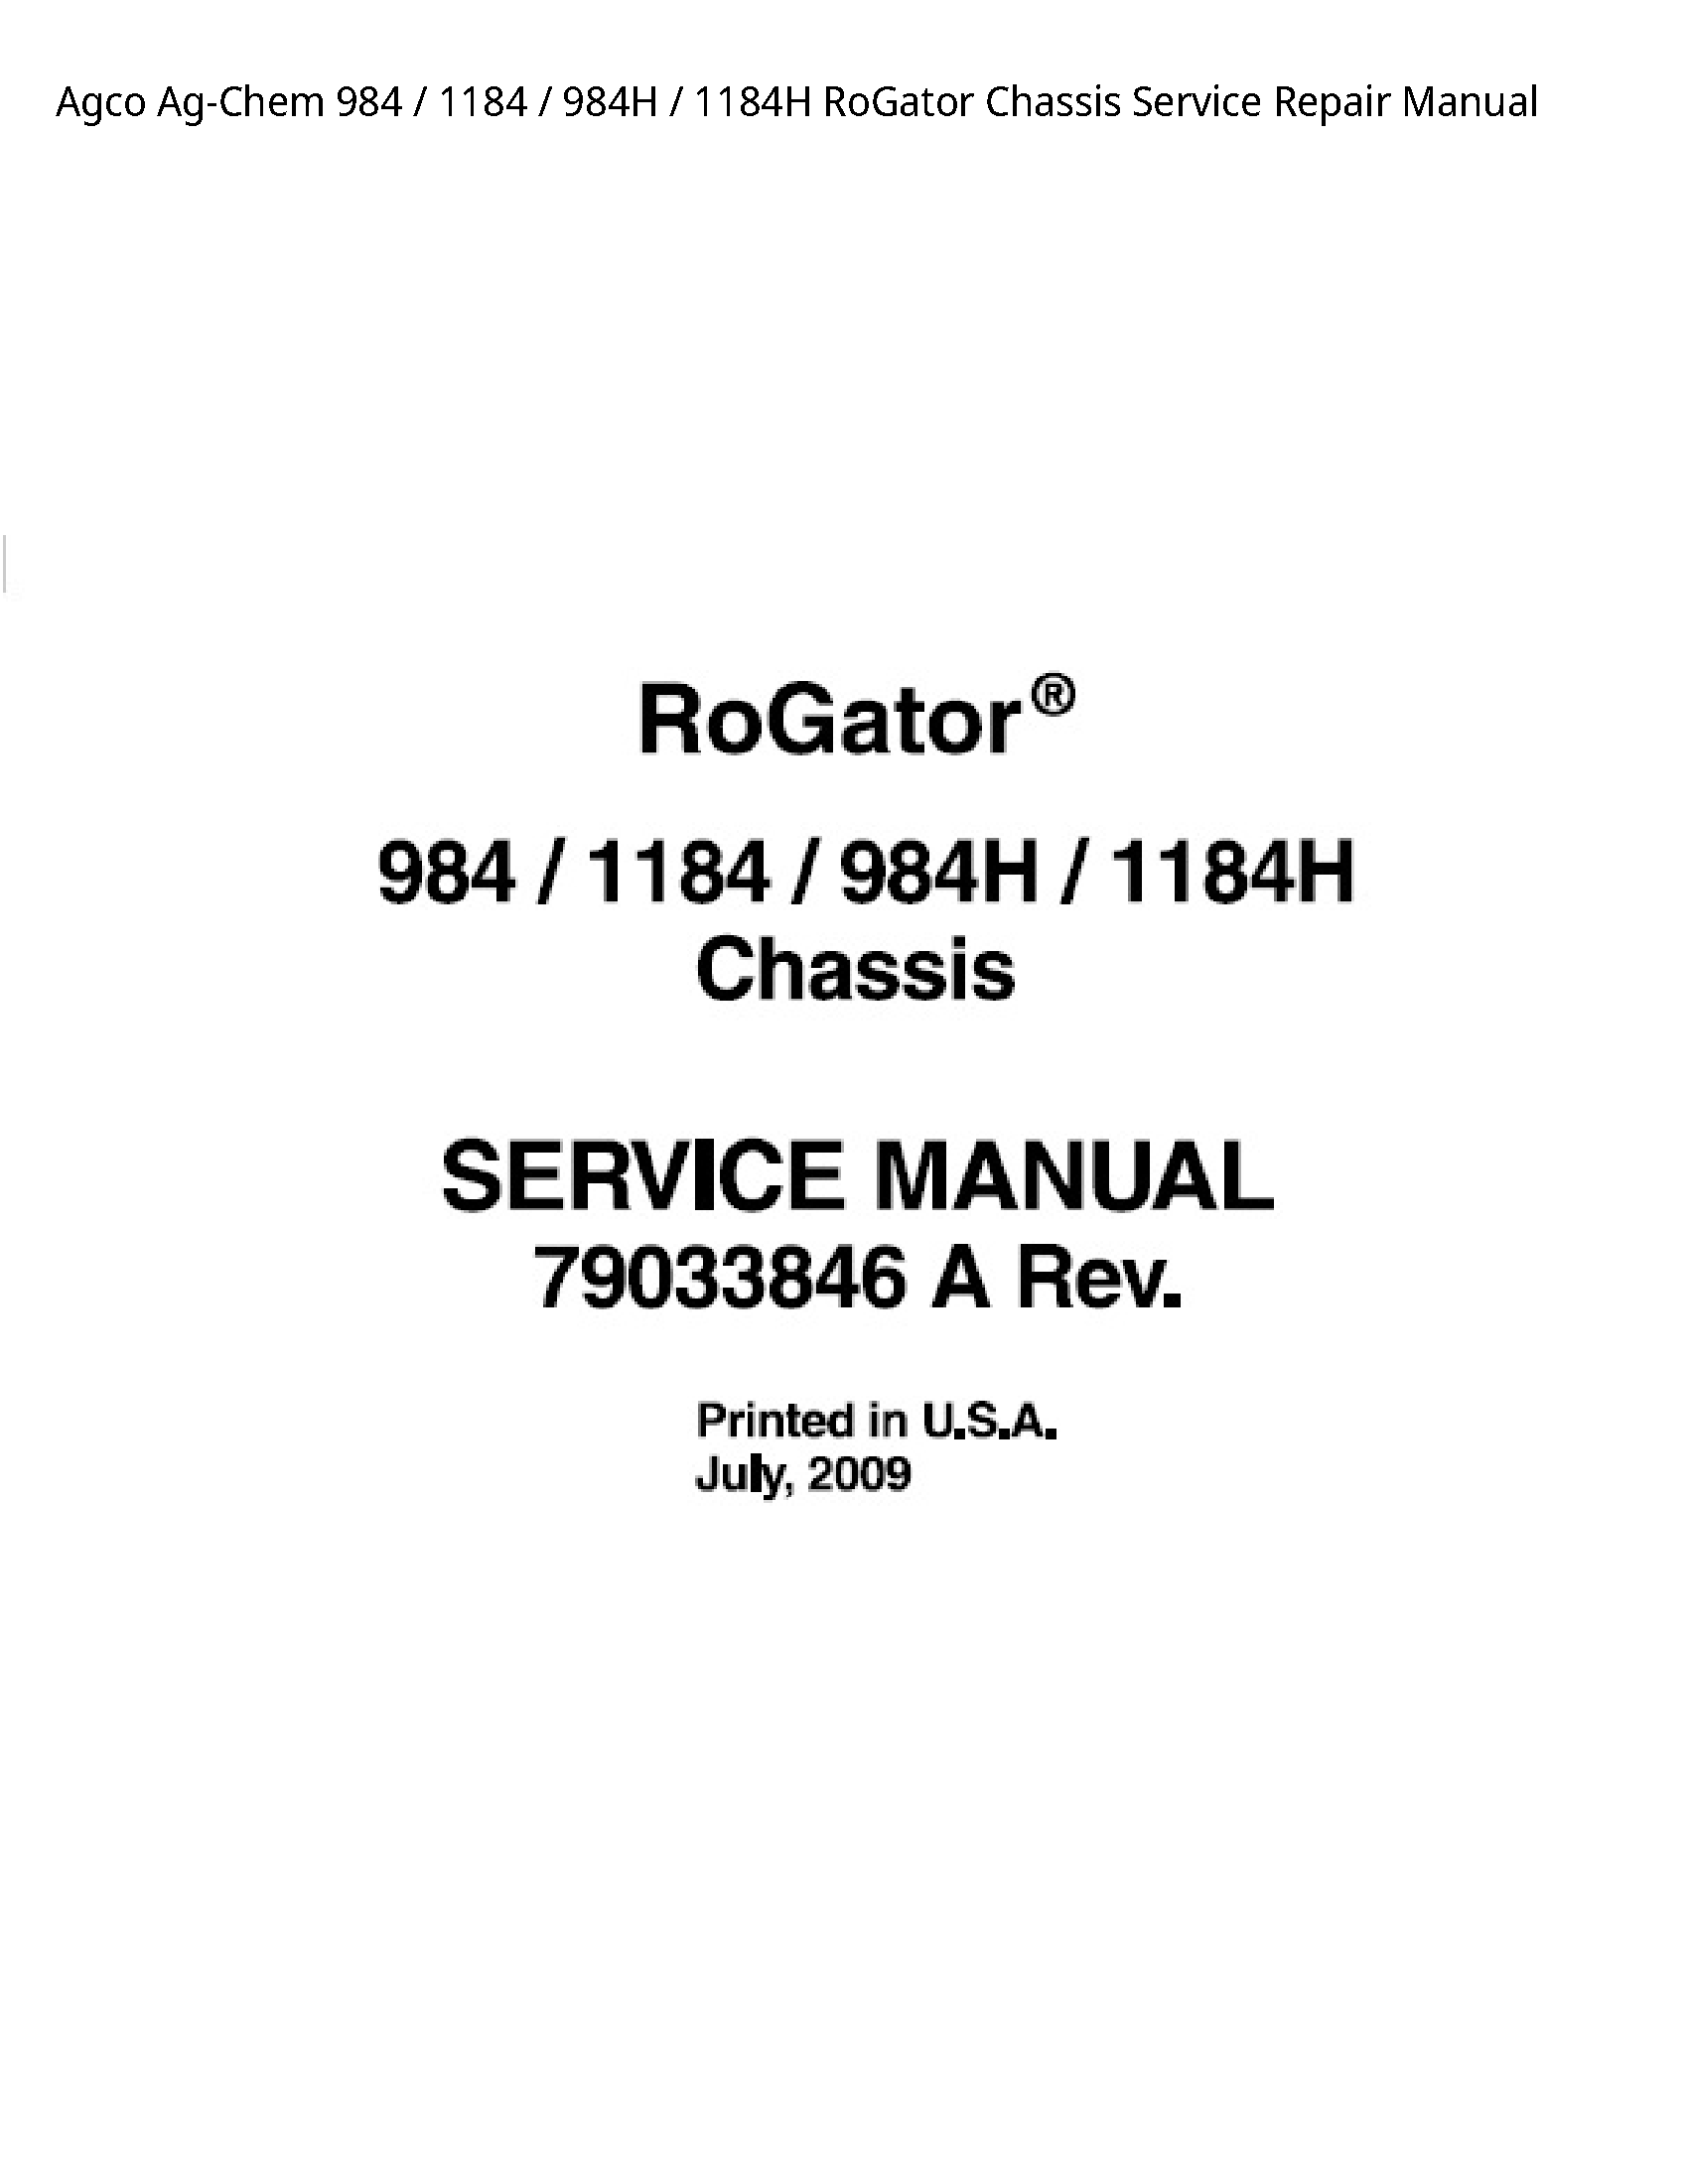 AGCO 984 Ag-Chem RoGator Chassis manual